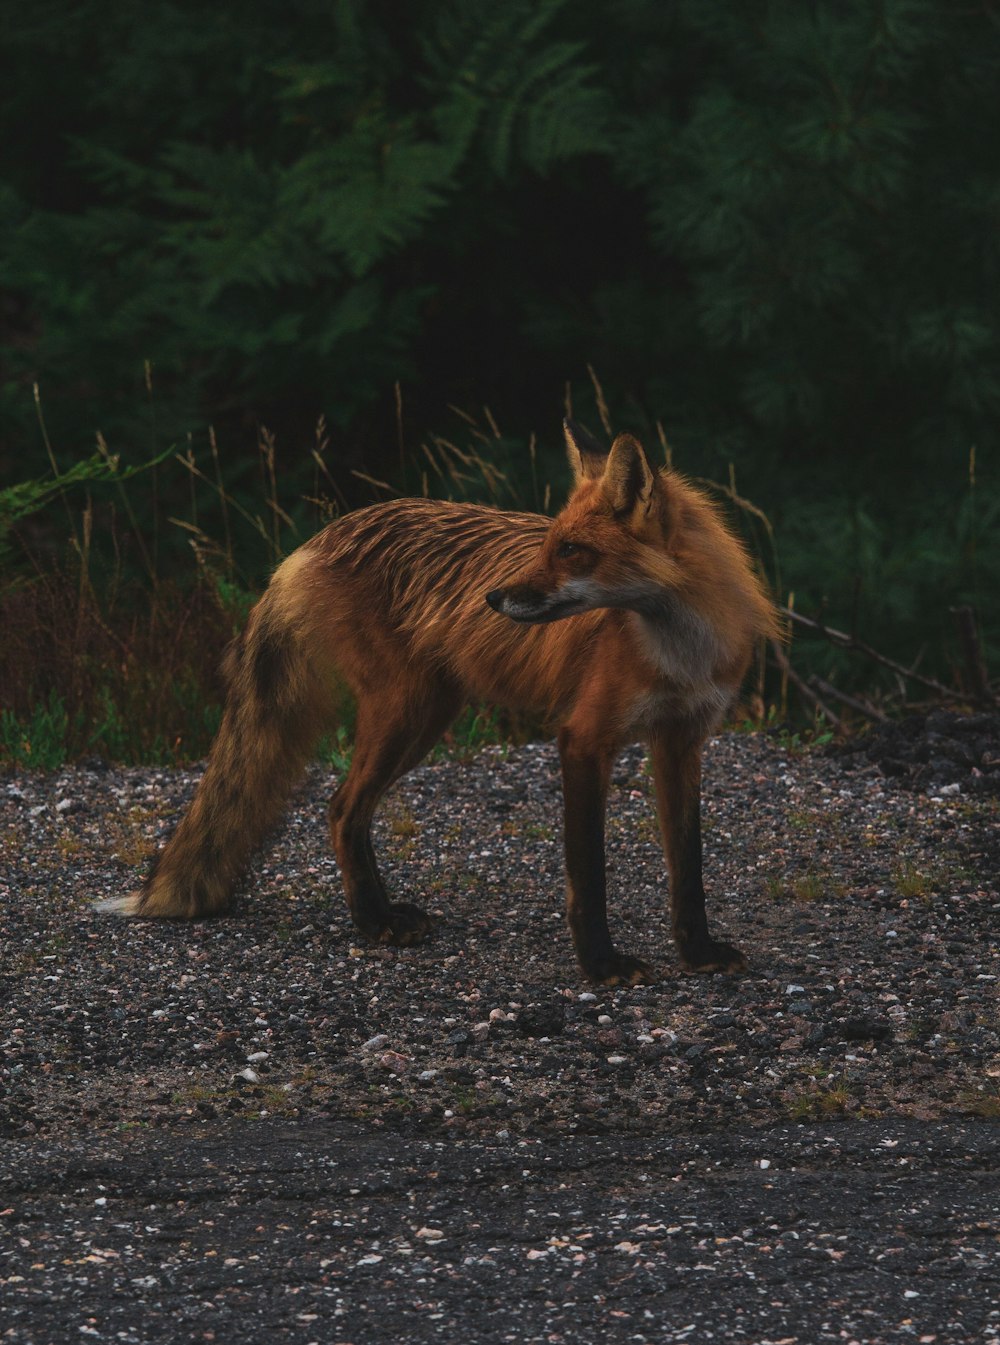 brown fox walking on dirt ground during daytime